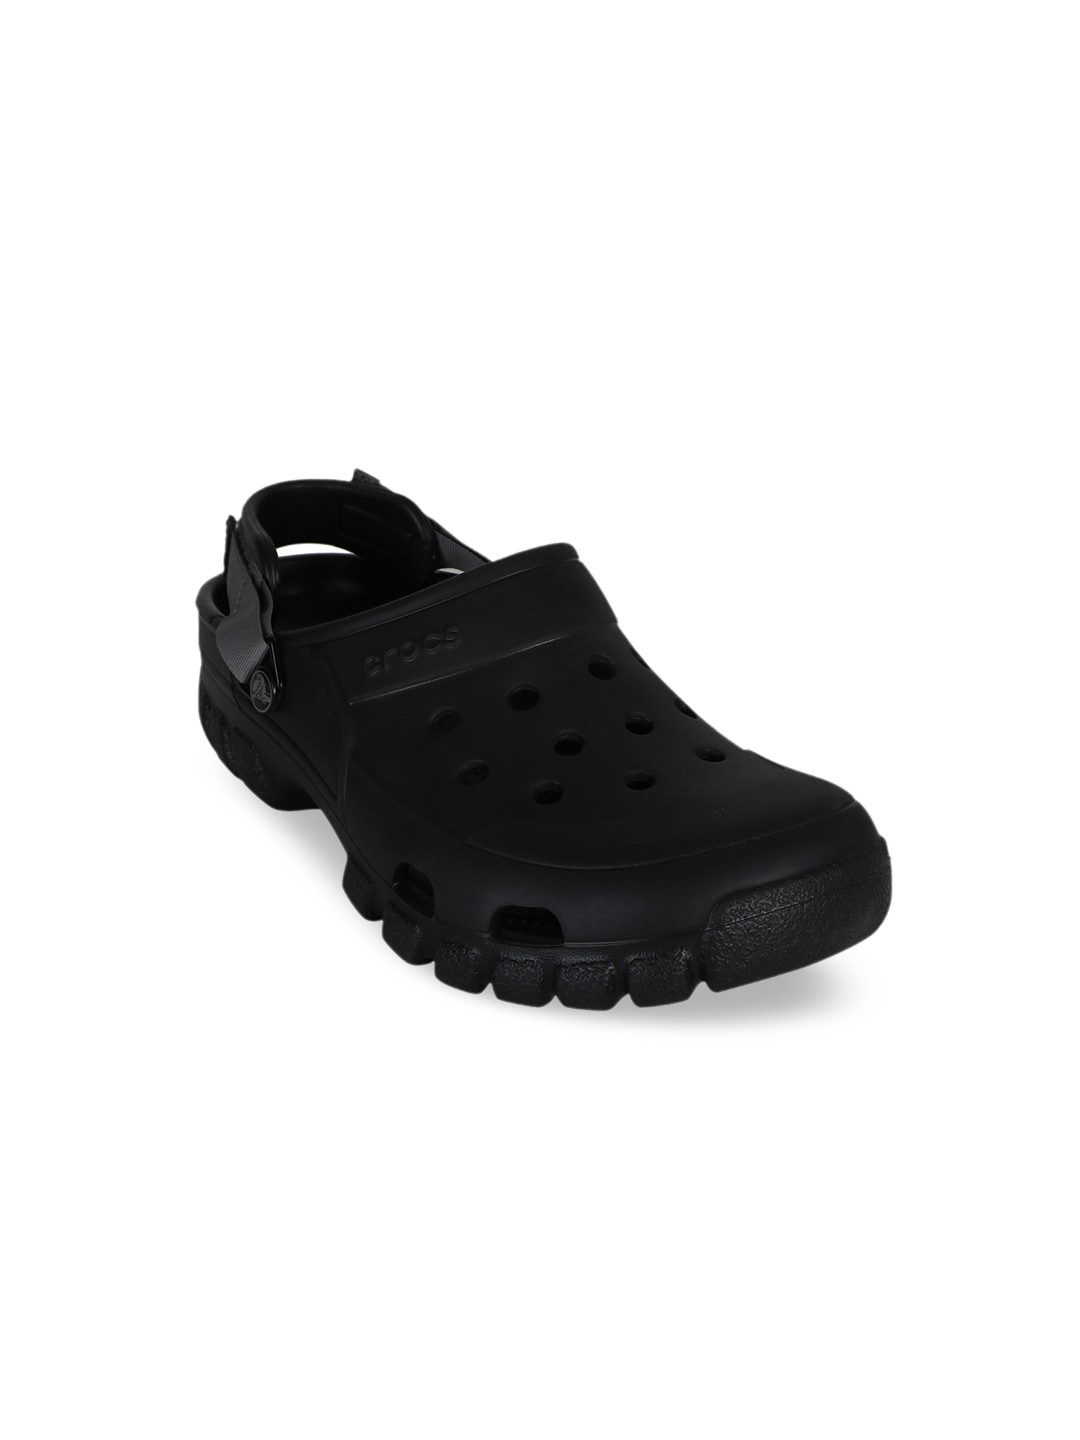 Crocs Unisex Black Sandals